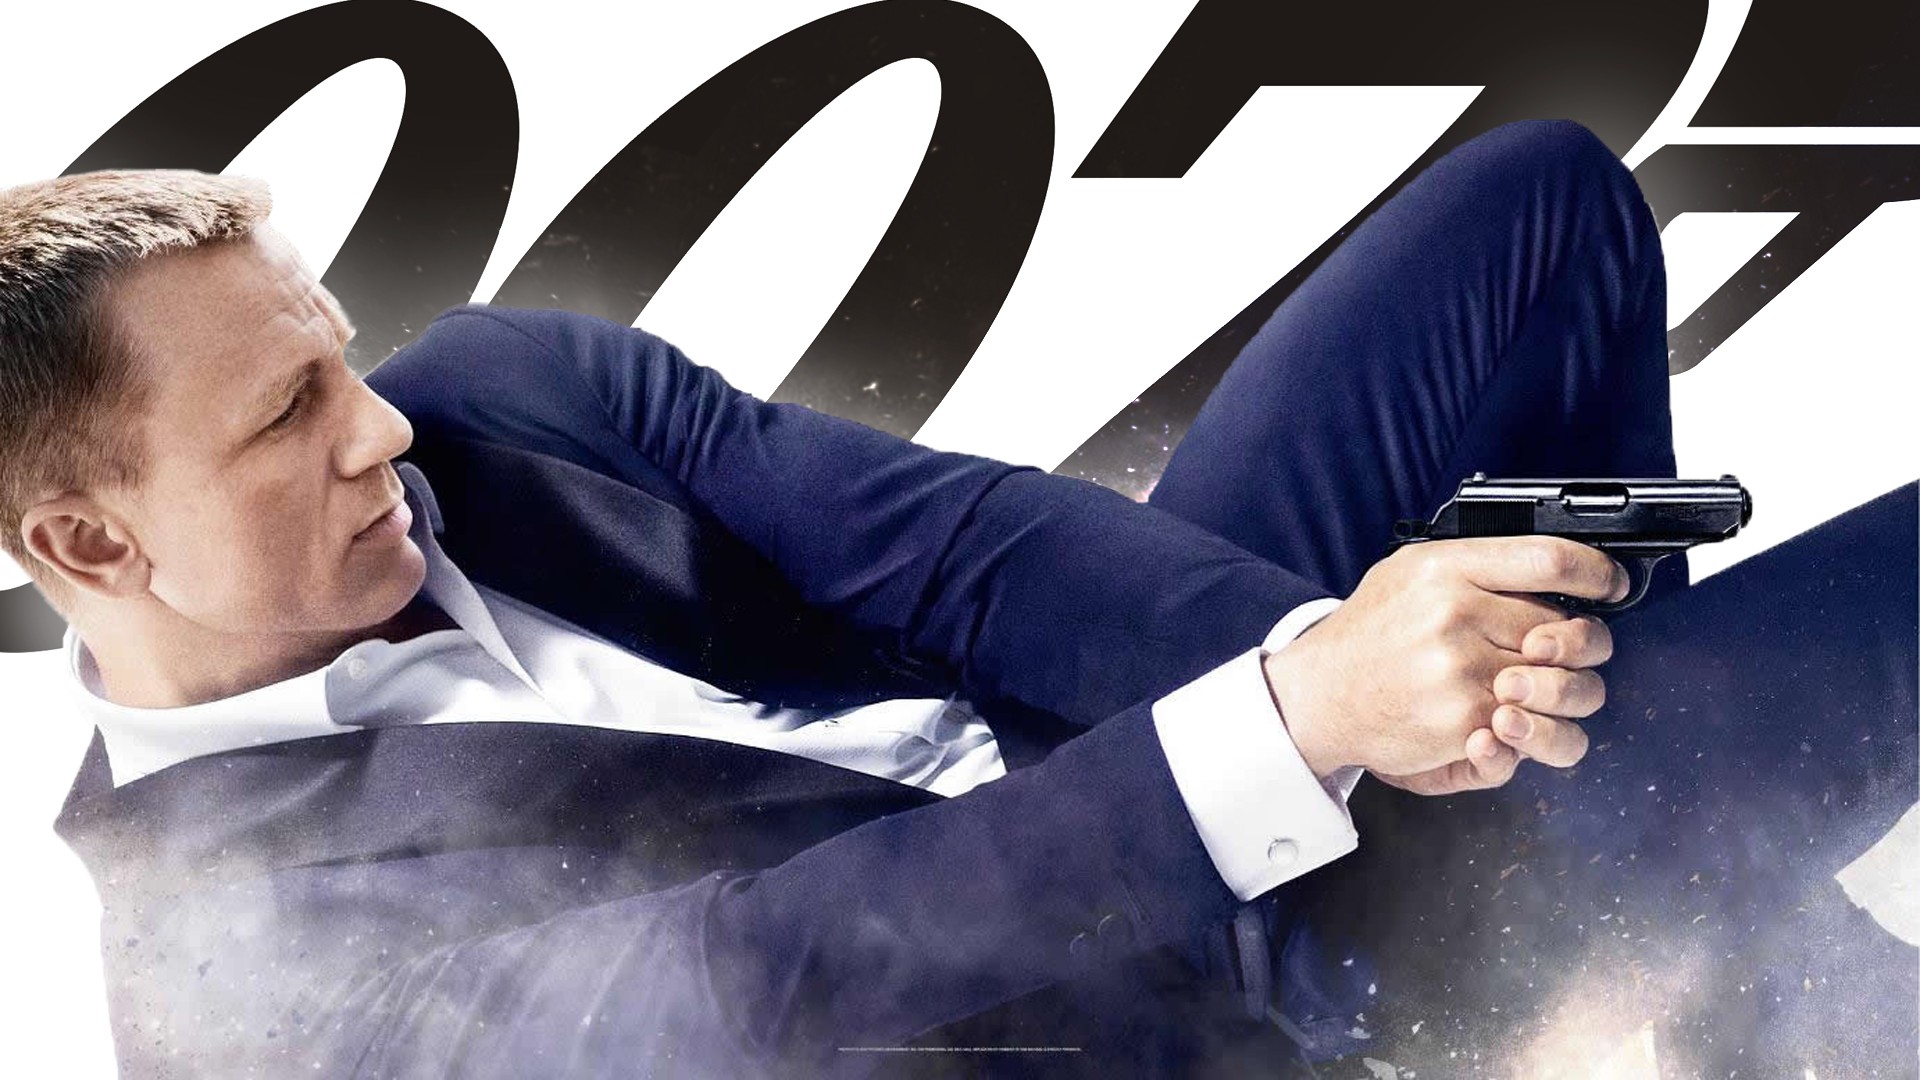 007 James Bond Skyfall Daniel Craig Movies Wallpapers Hd Desktop And Mobile Backgrounds 